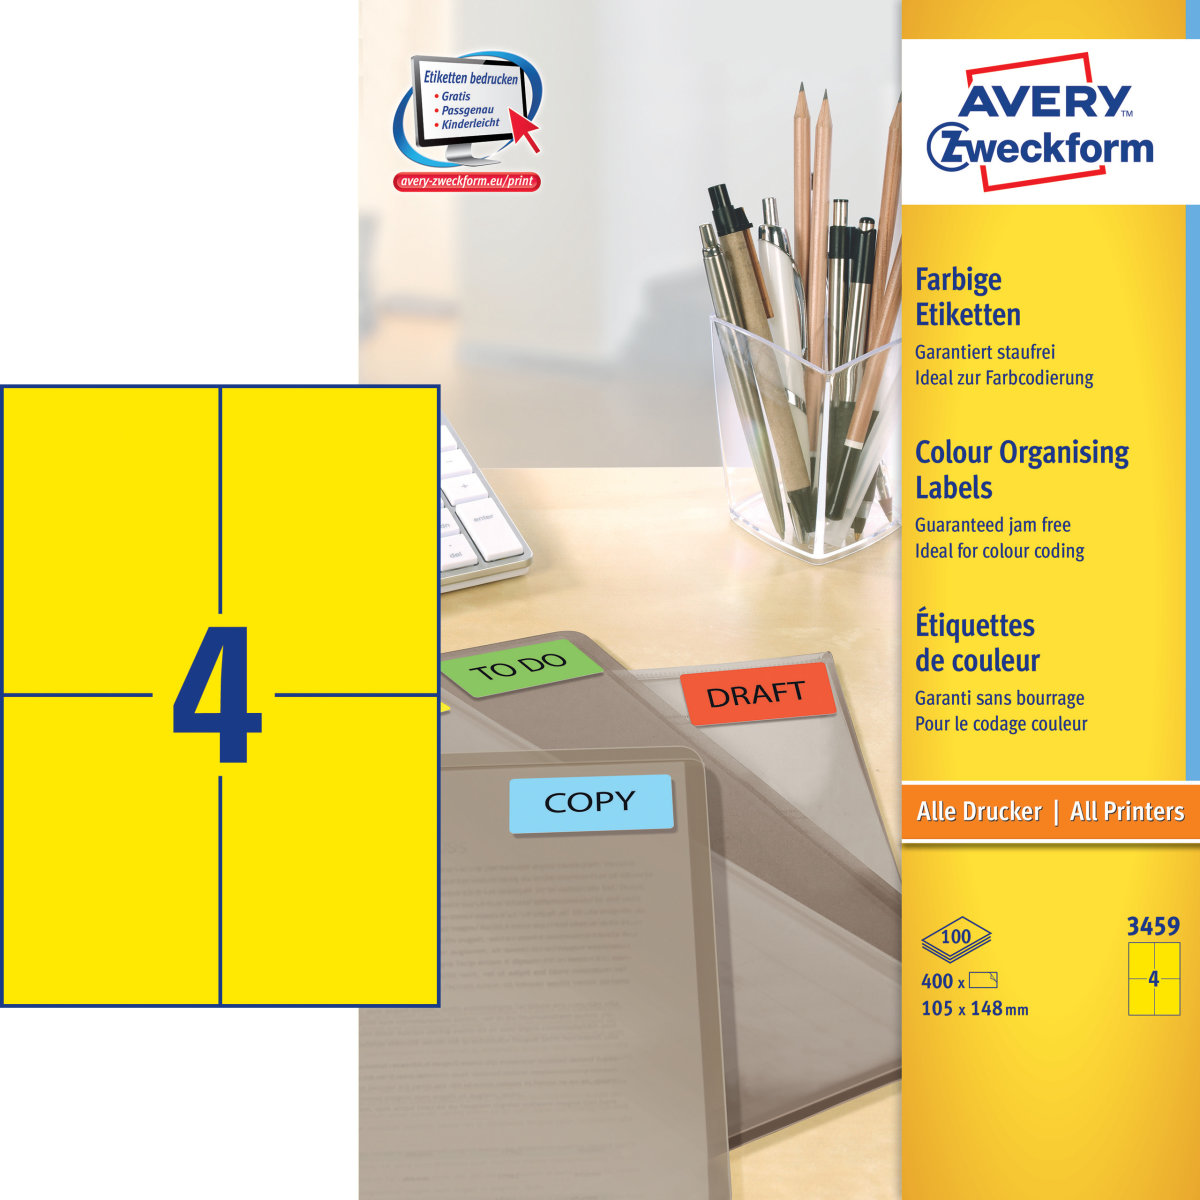 Avery 3459 farvede etiketter, 105 x 148mm, gul